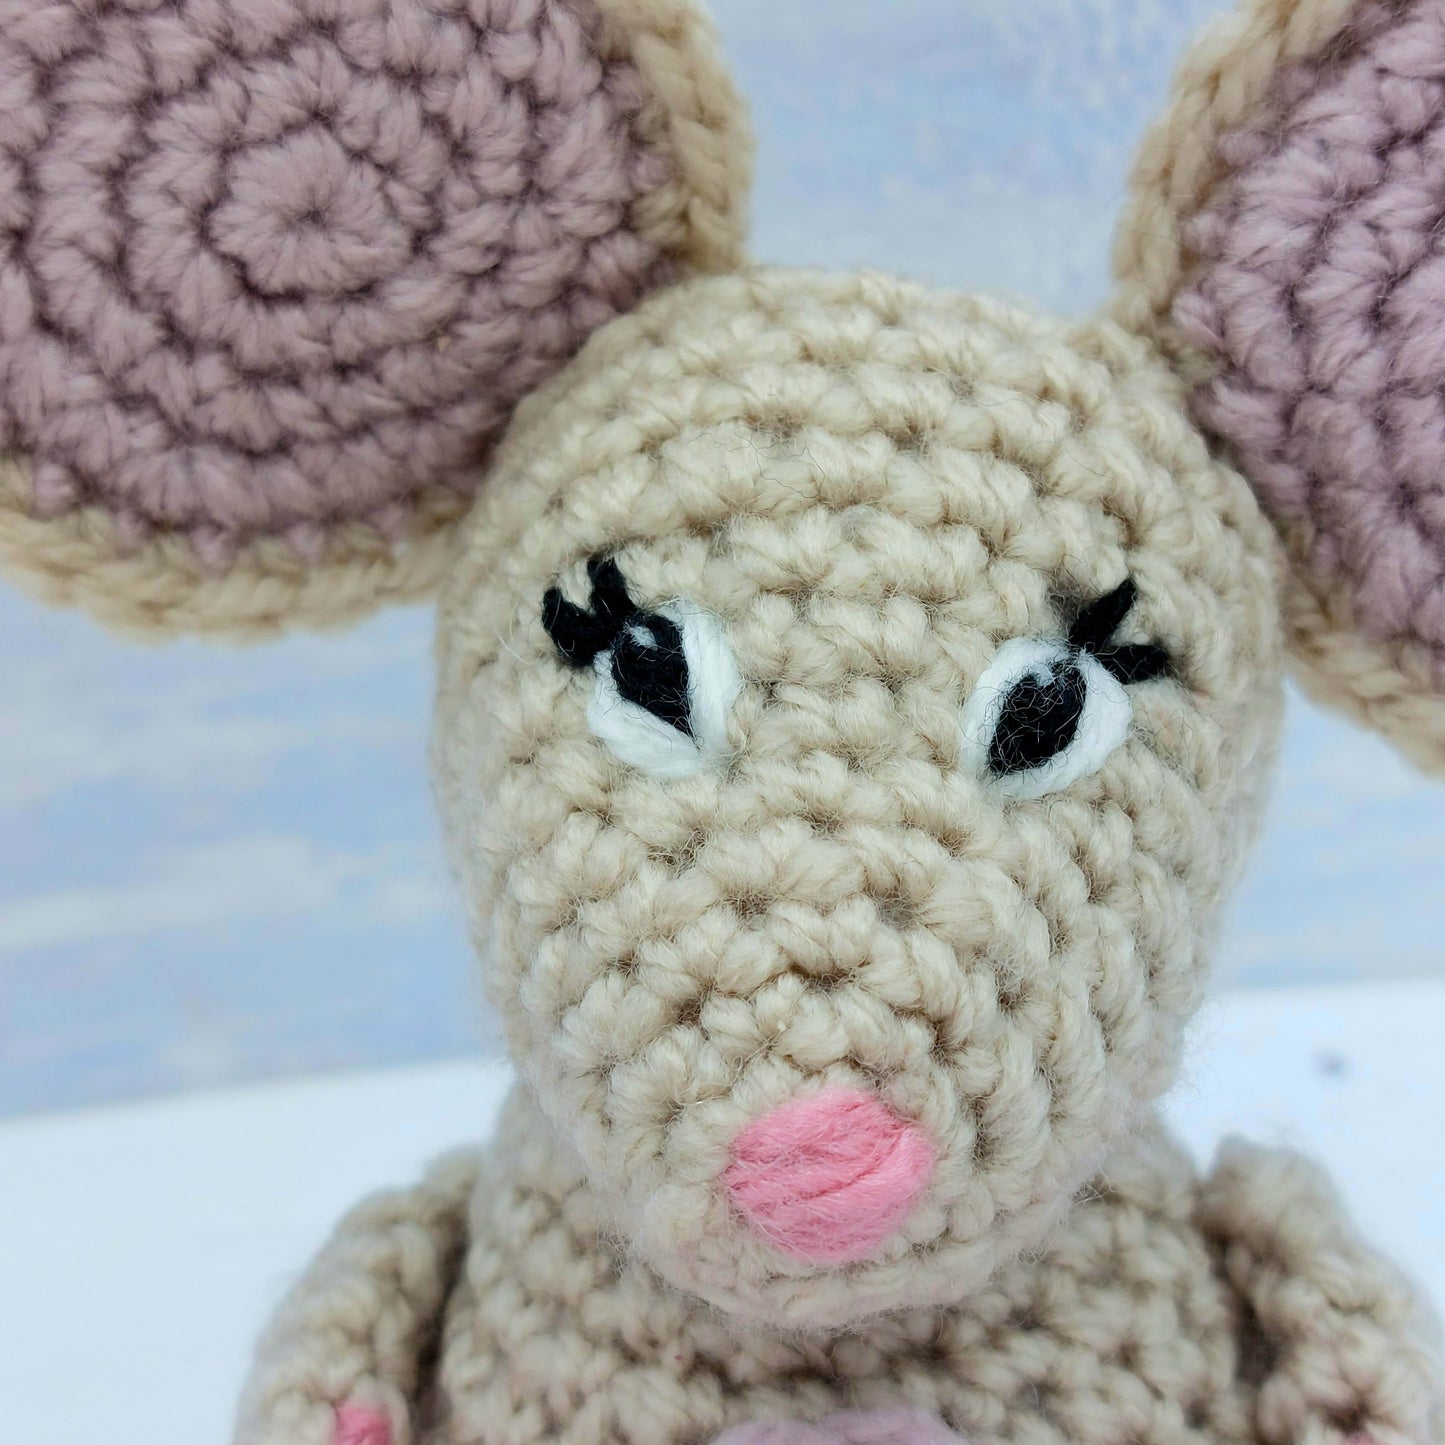 Mabel the Mouse - PDF Crochet Pattern